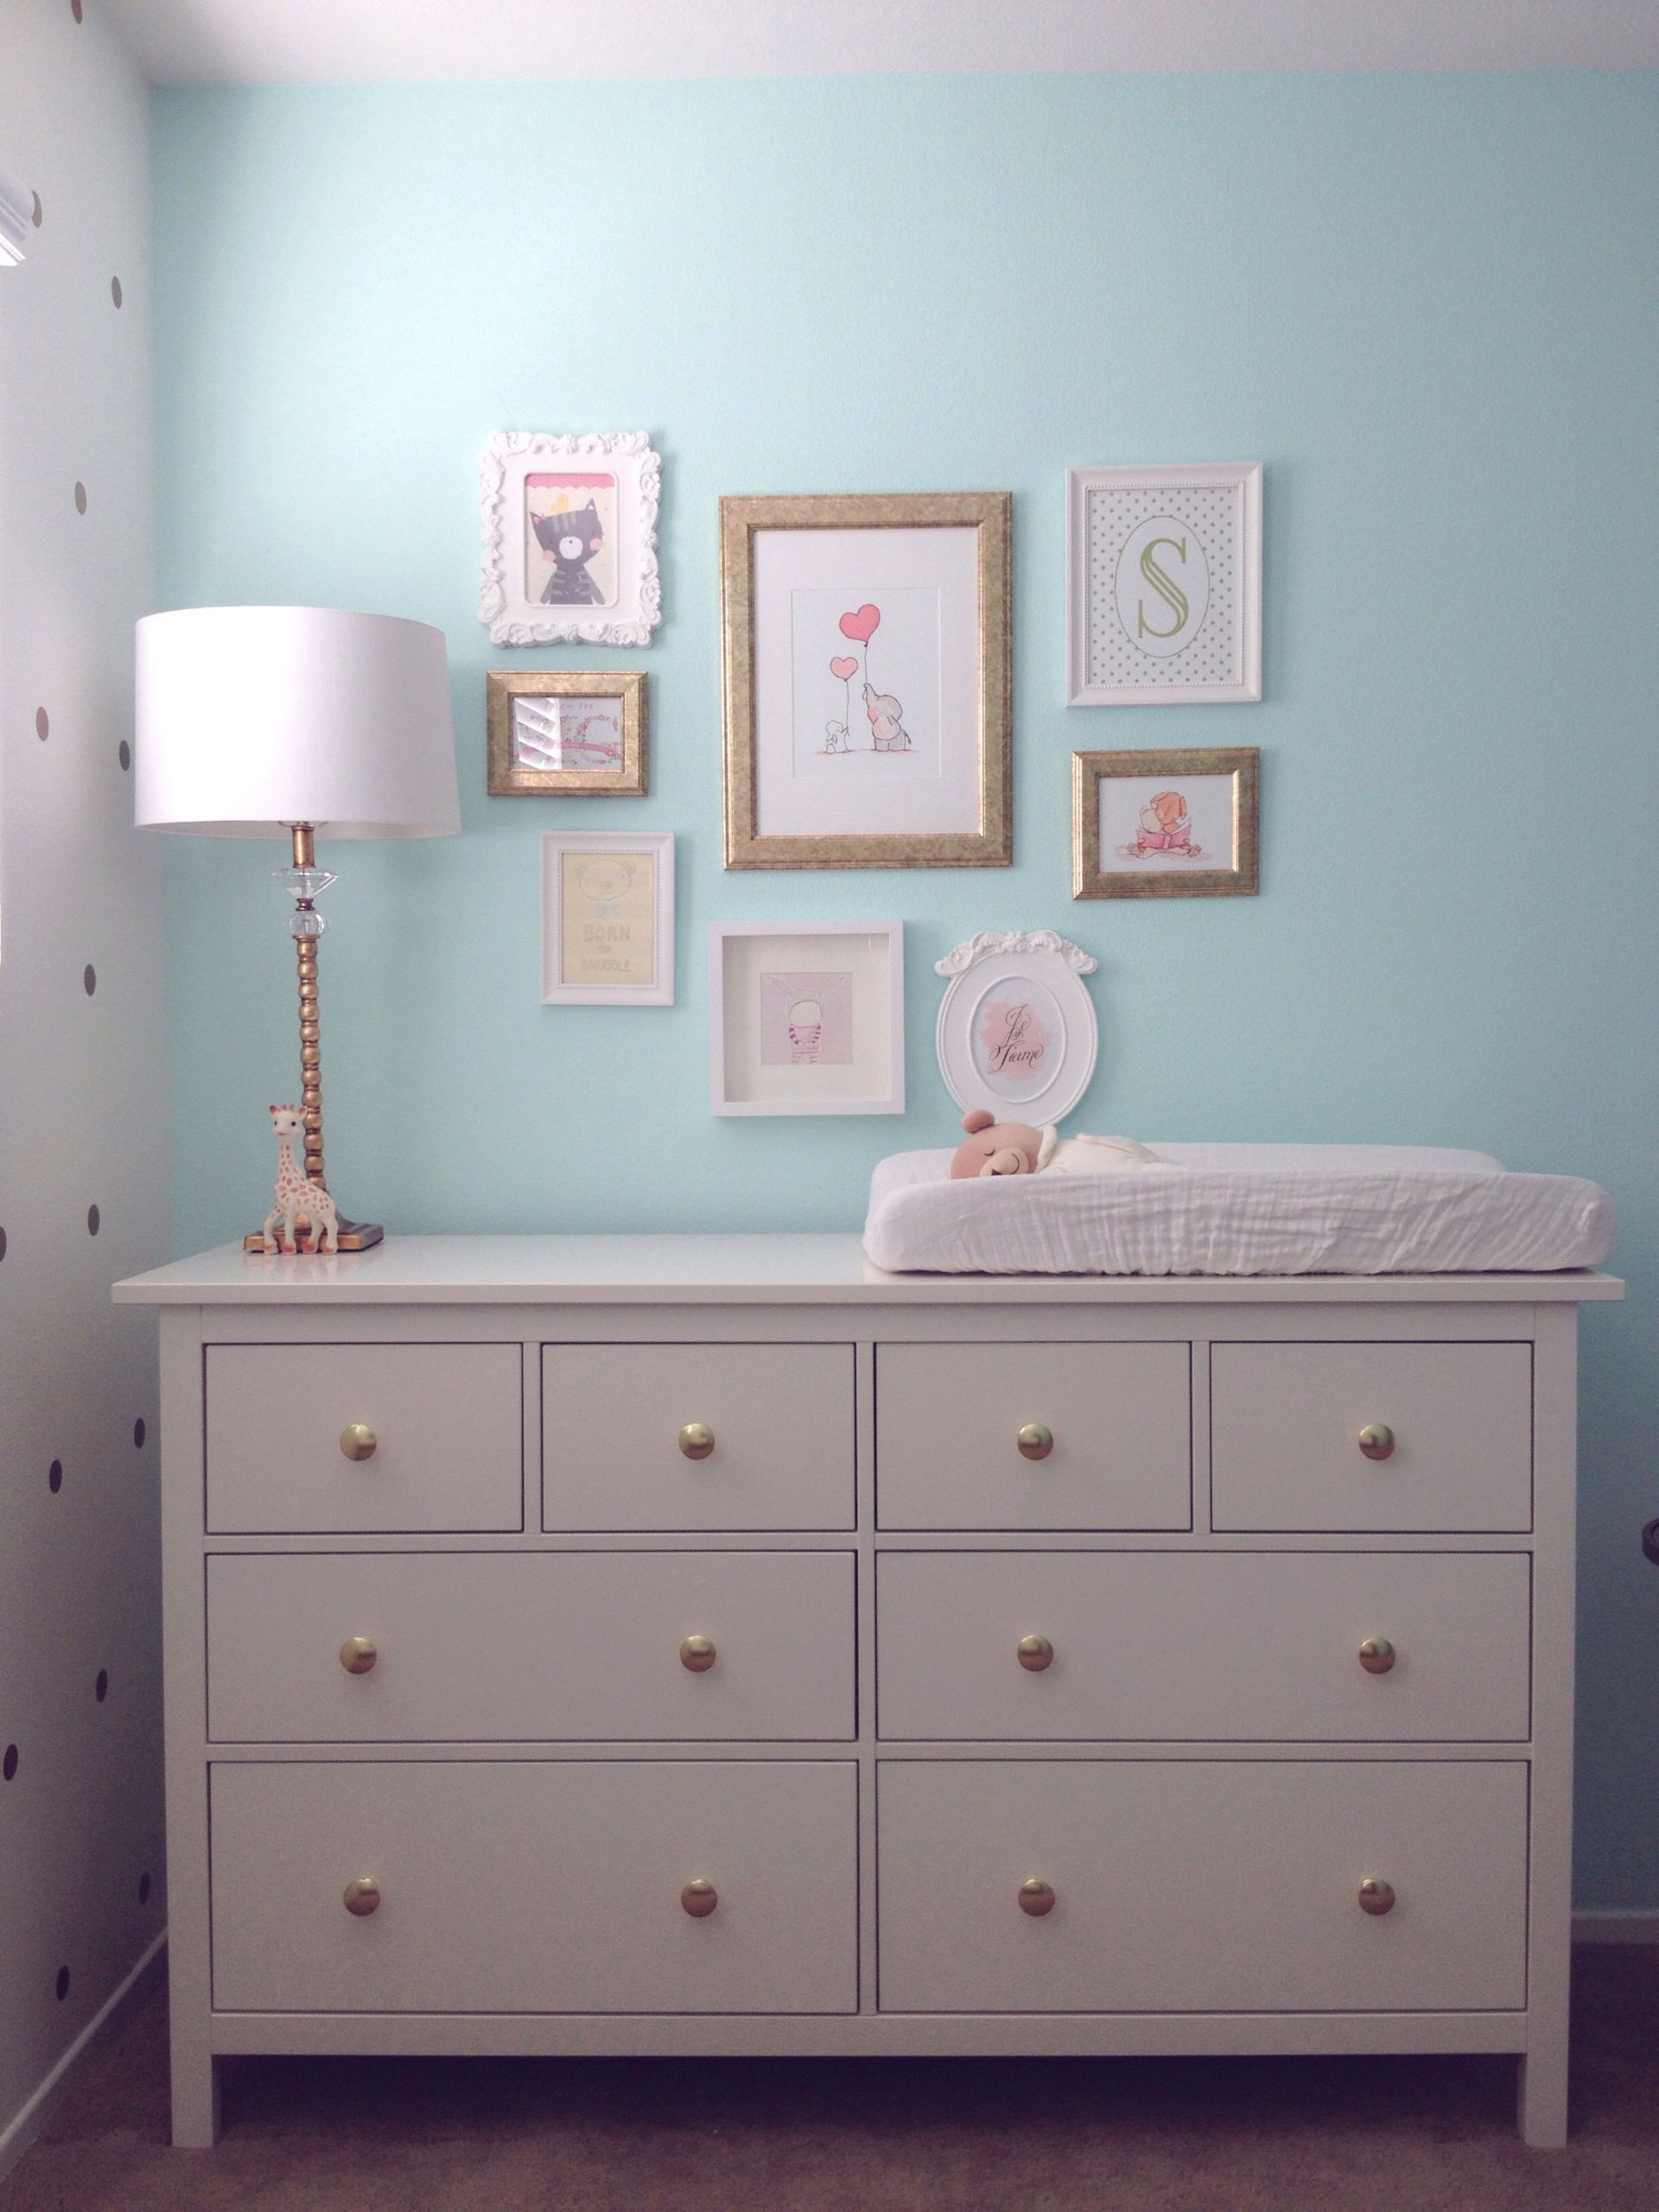 White Dressers For Baby Room
 Mint & gold nursery Frames from IKEA HEMNES dresser from